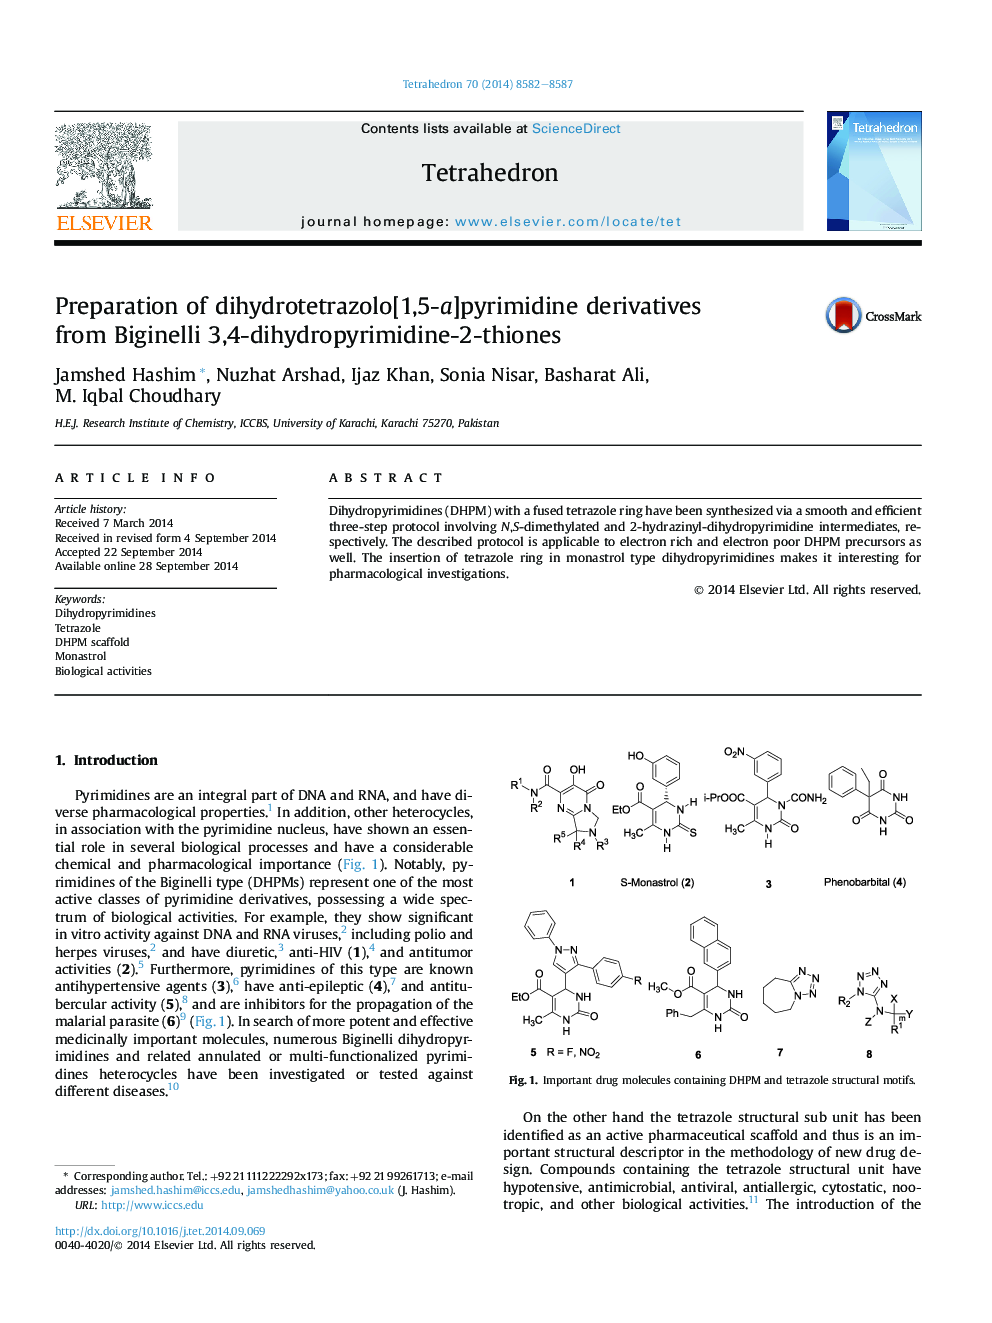 Preparation of dihydrotetrazolo[1,5-a]pyrimidine derivatives fromÂ Biginelli 3,4-dihydropyrimidine-2-thiones